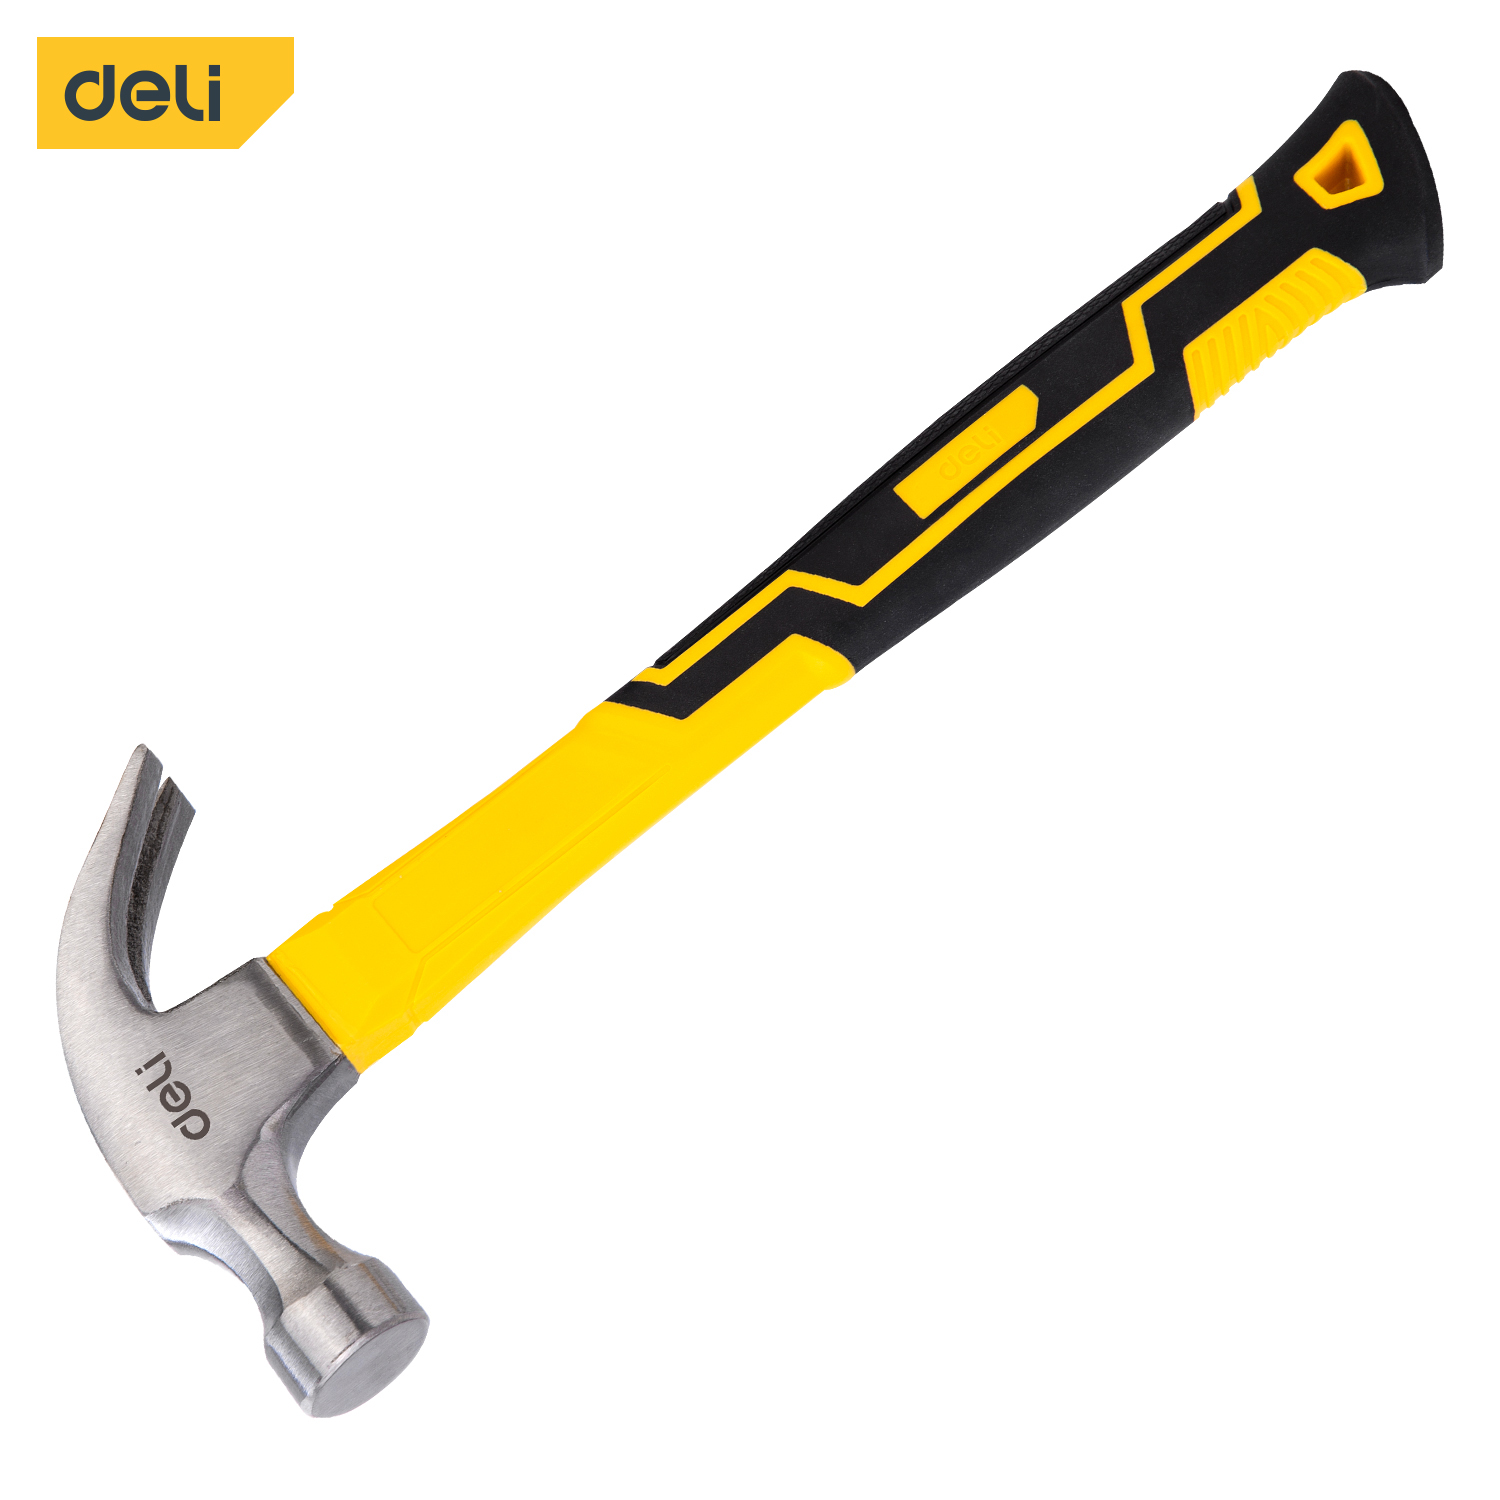 Deli-EDL5002 Claw Hammer